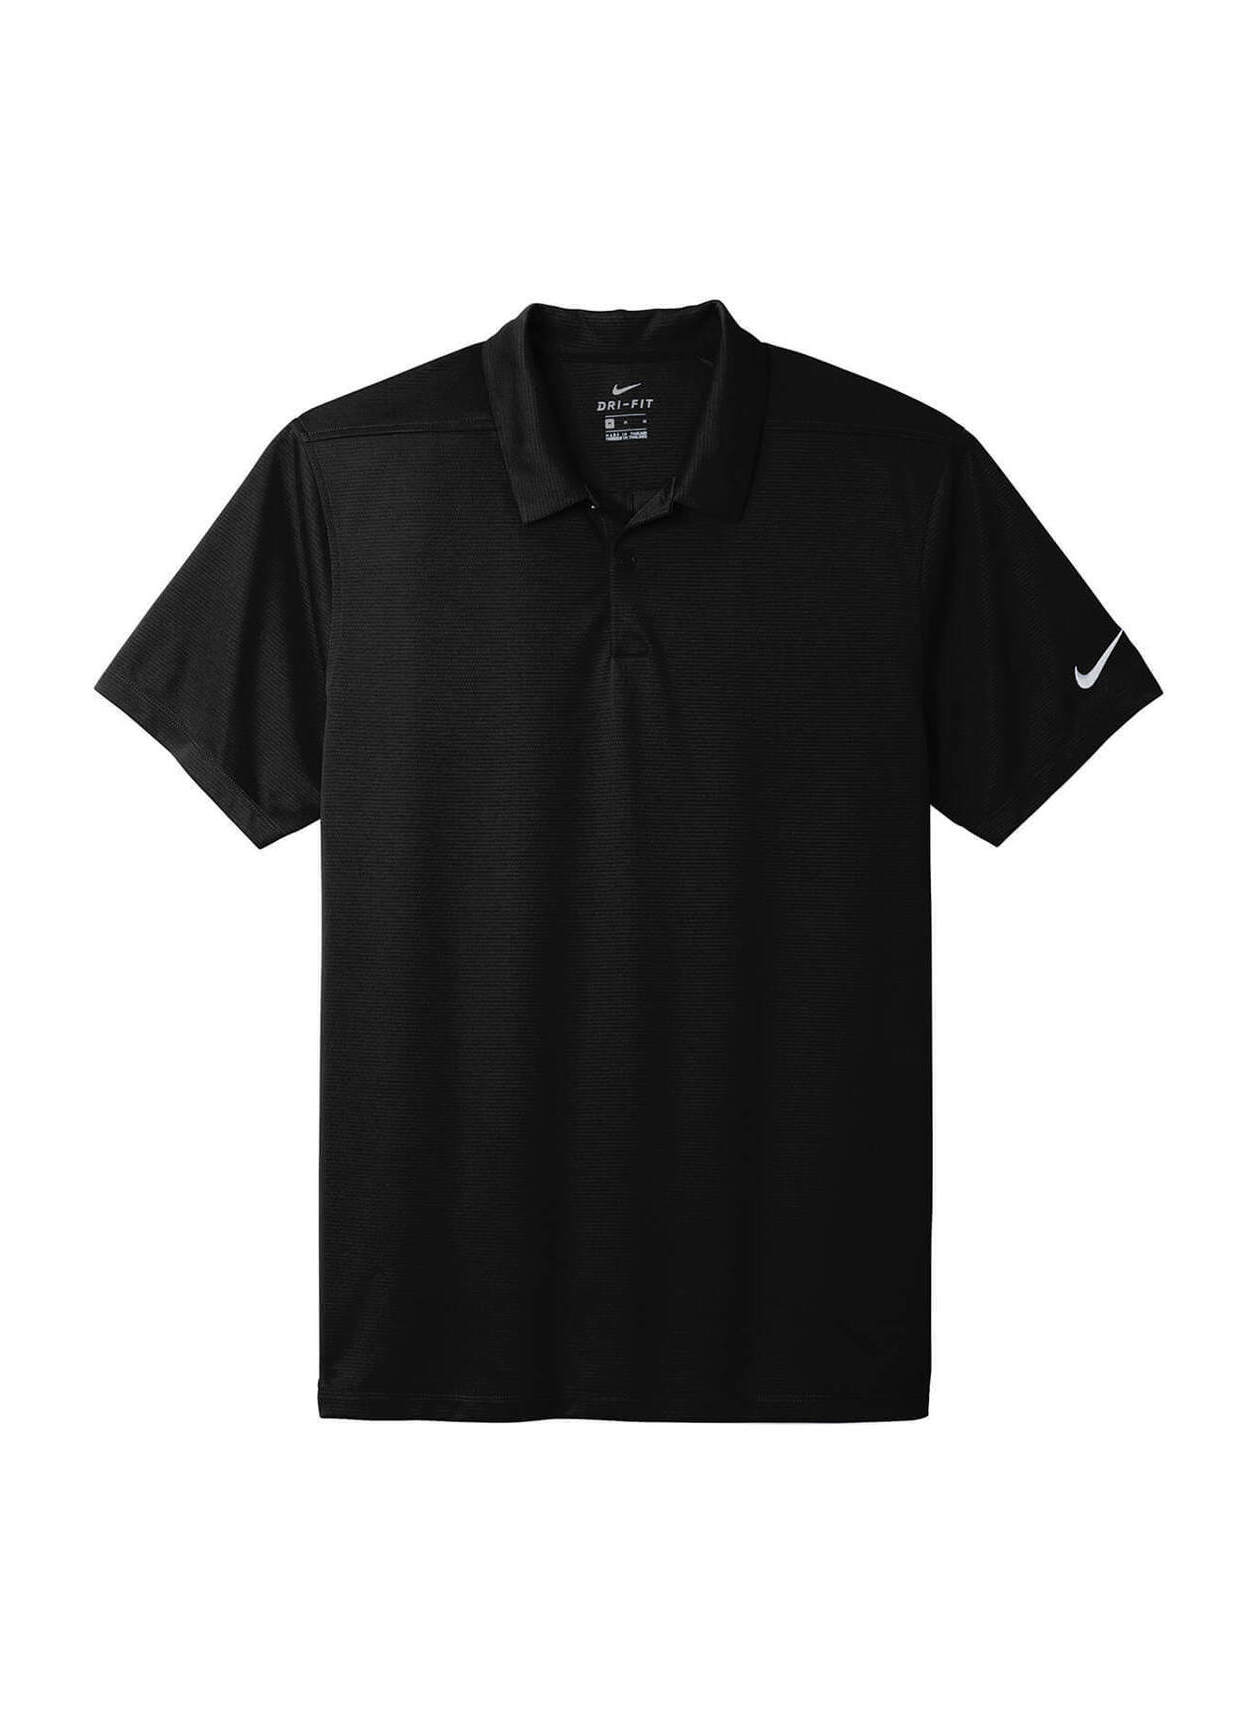 Men's Nike Polo Shirts